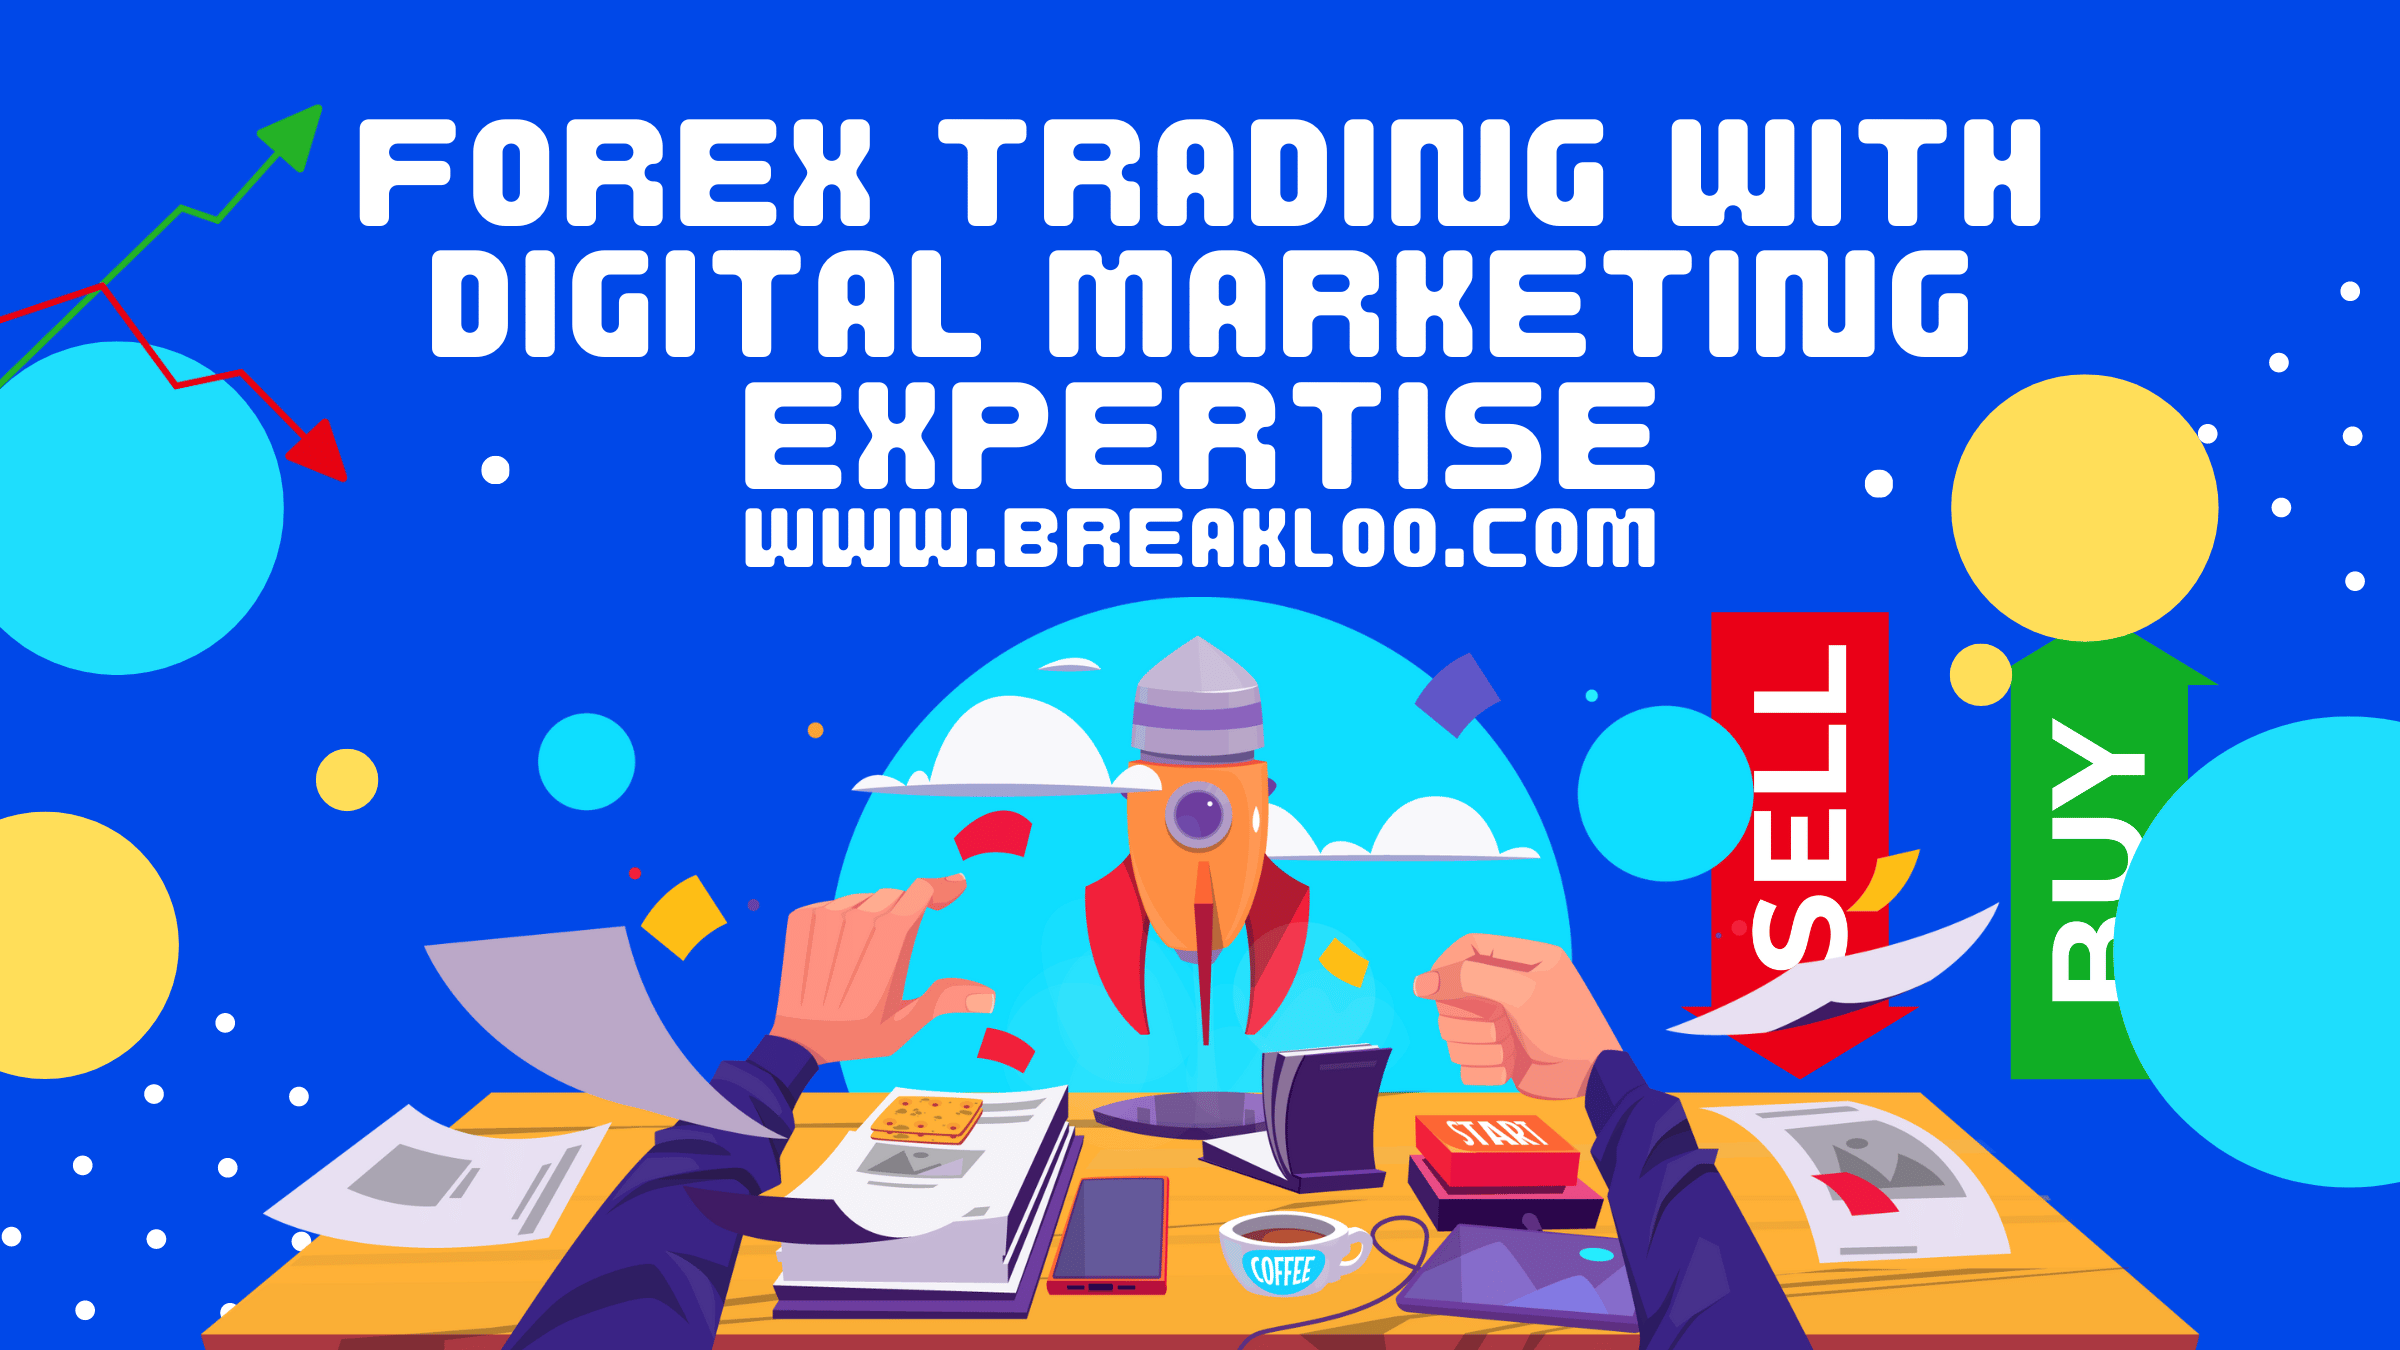 Forex Trading with Digital Marketing Expertise "digital marketing agency"